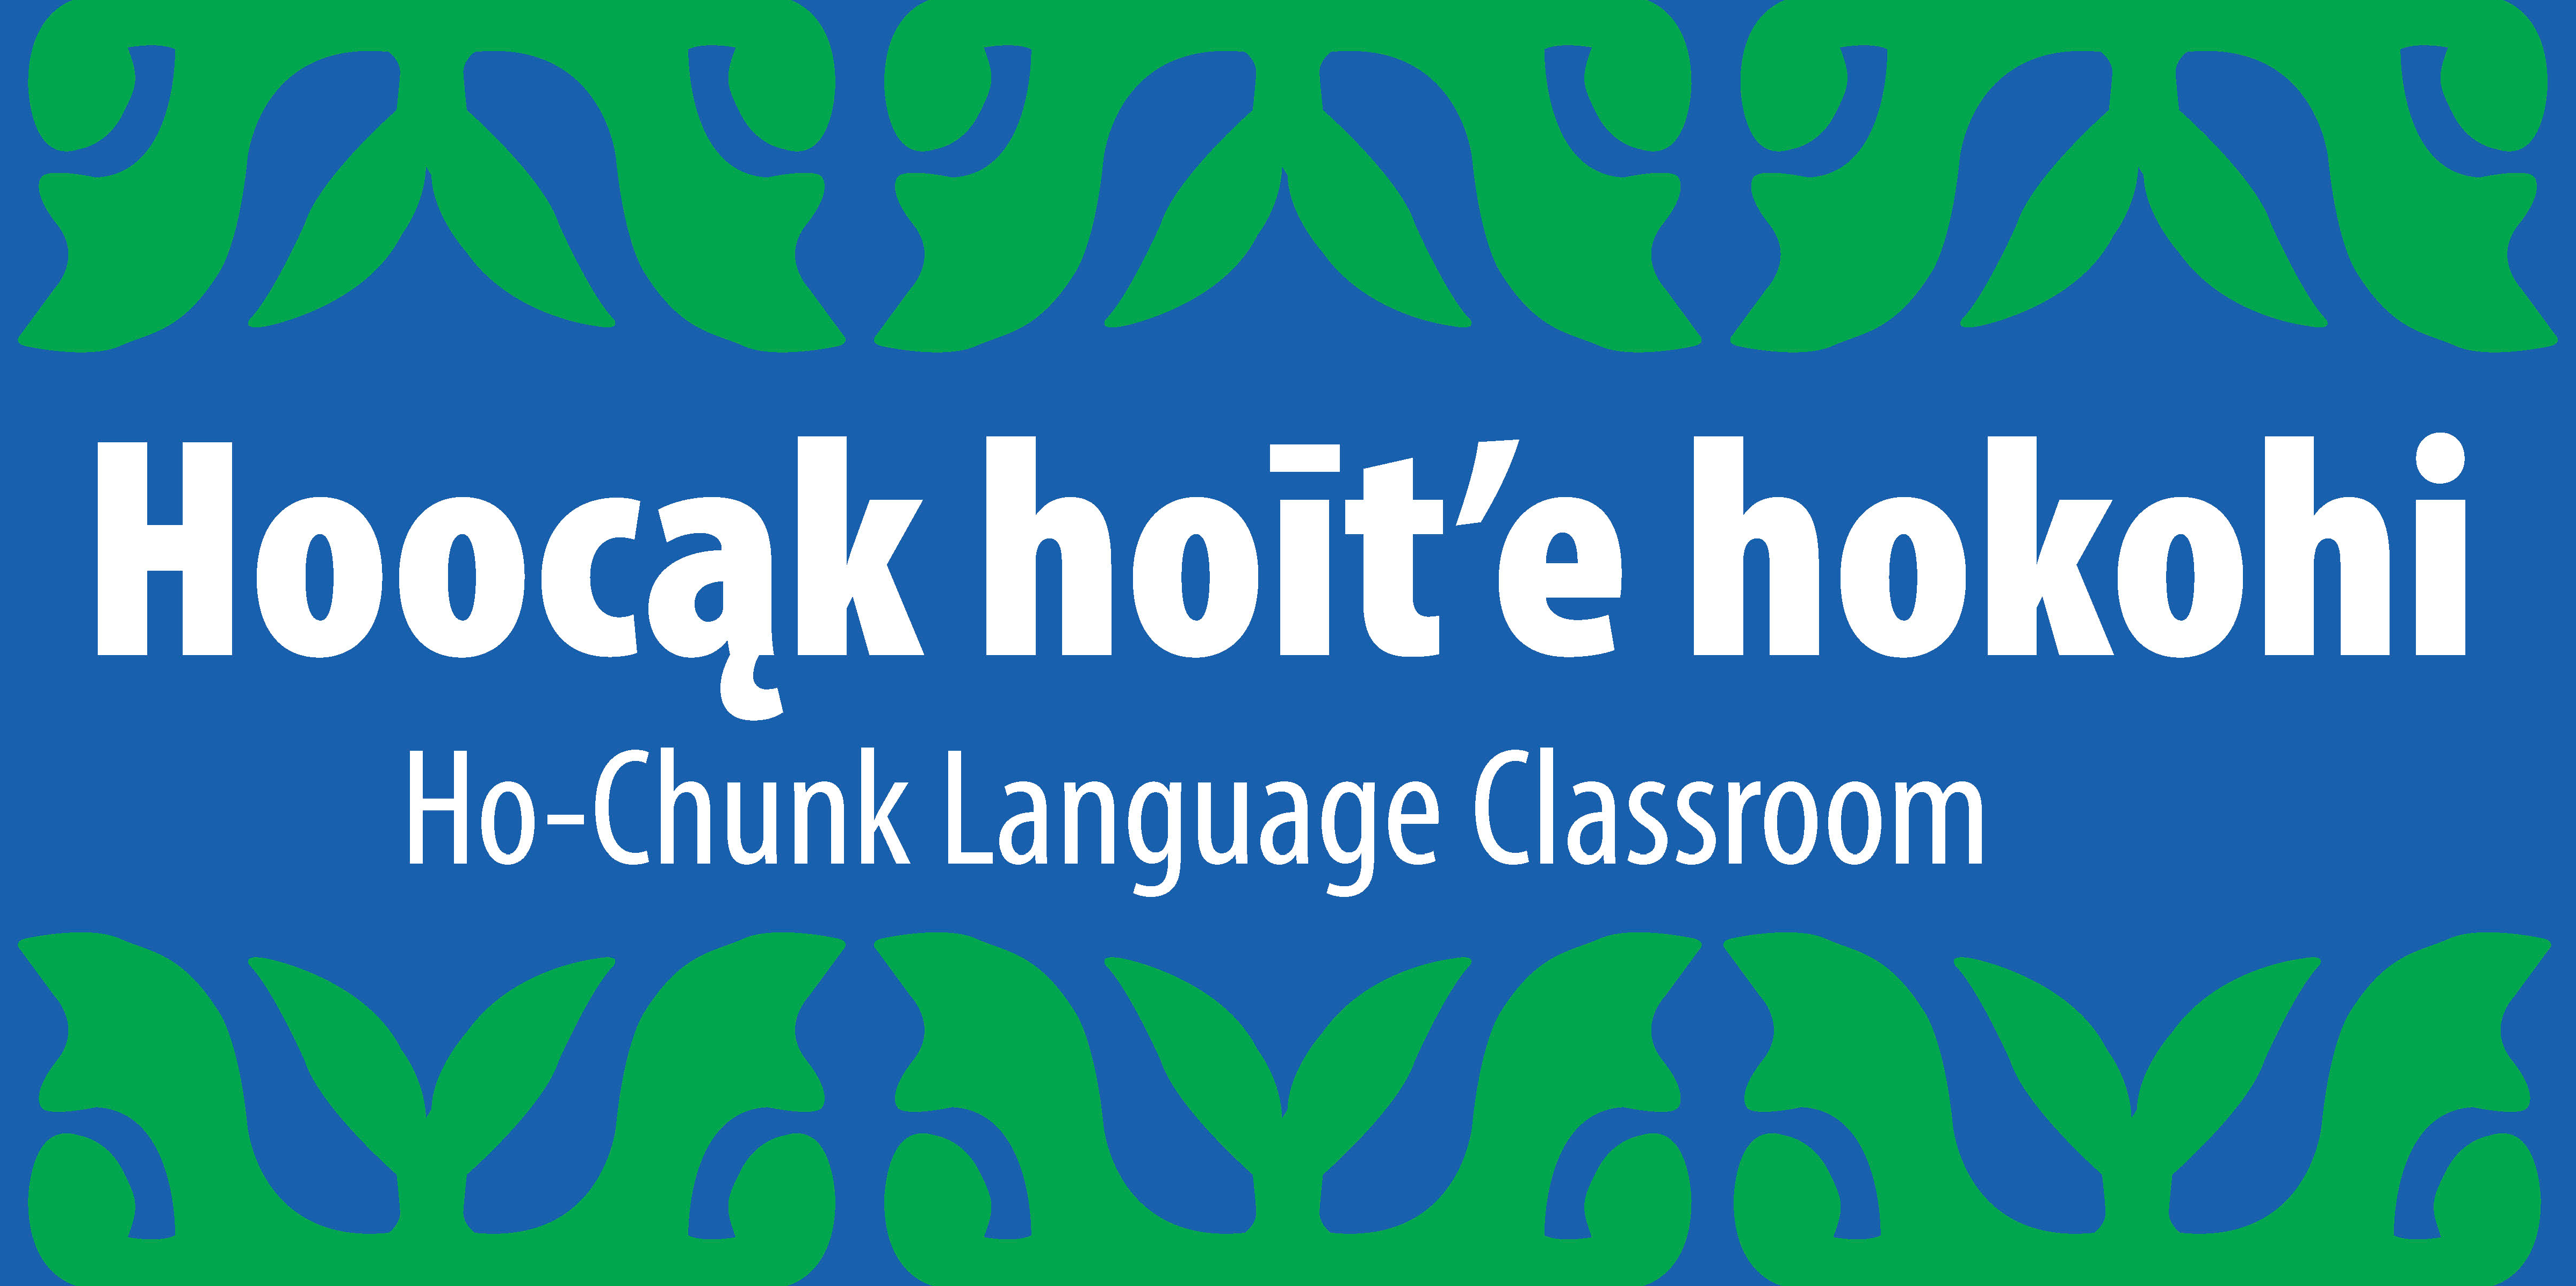 Ho-Chunk door sign that says "Ho-Chunk Language Classroom" in the Ho-Chunk language